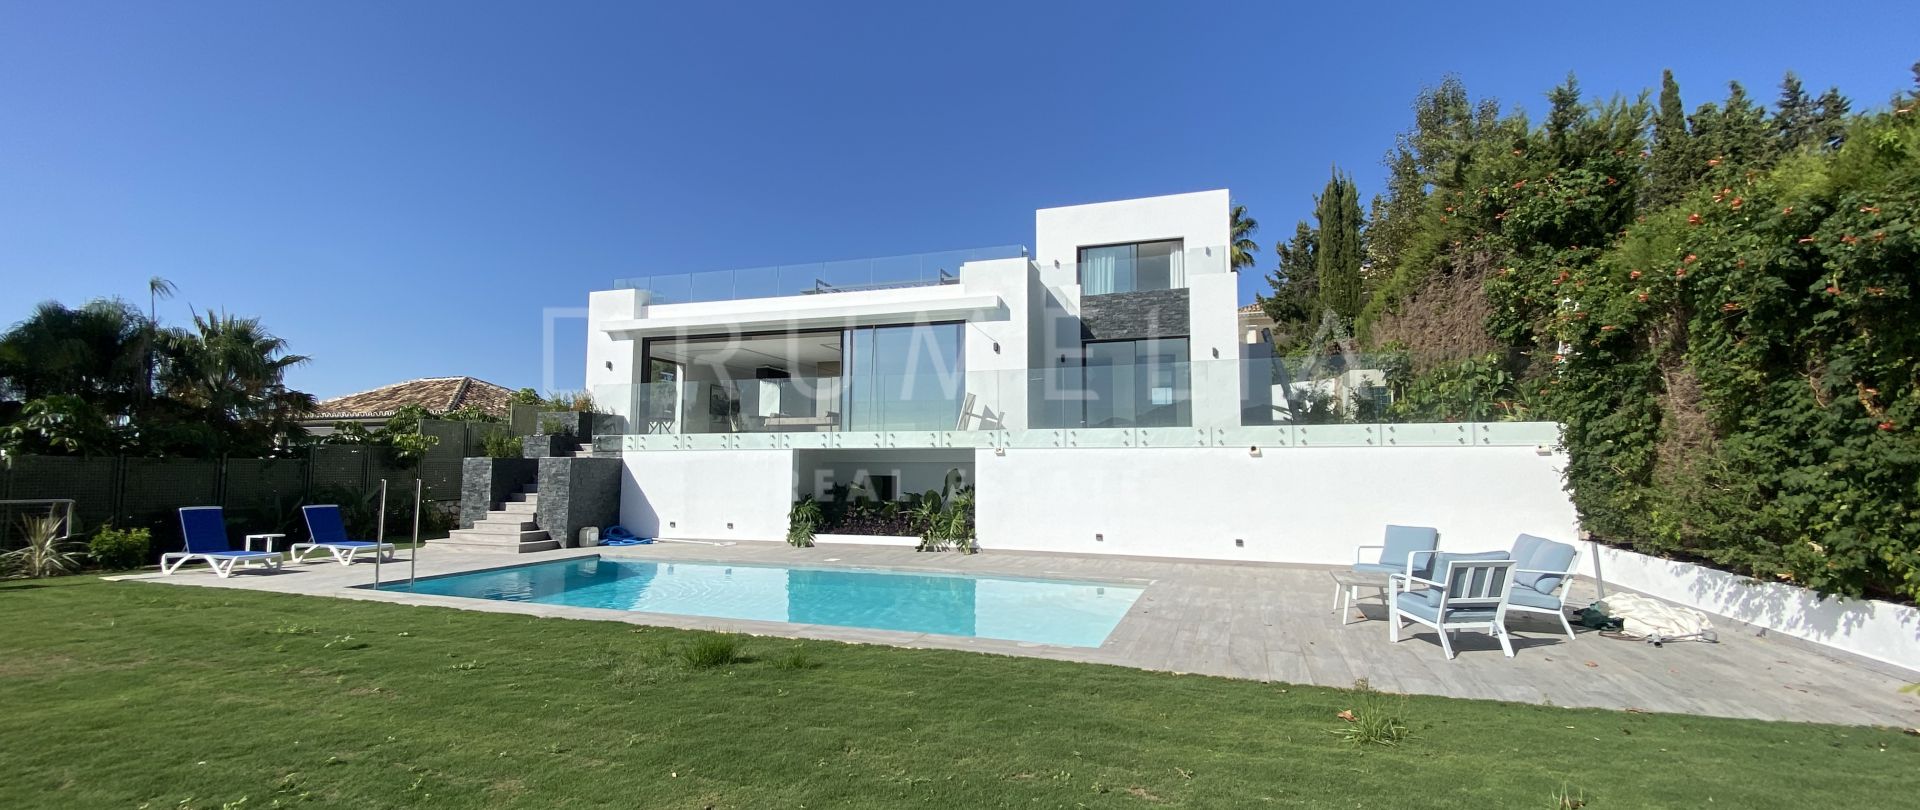 Villa moderna a estrenar a pasos de Sierra Blanca, Marbella